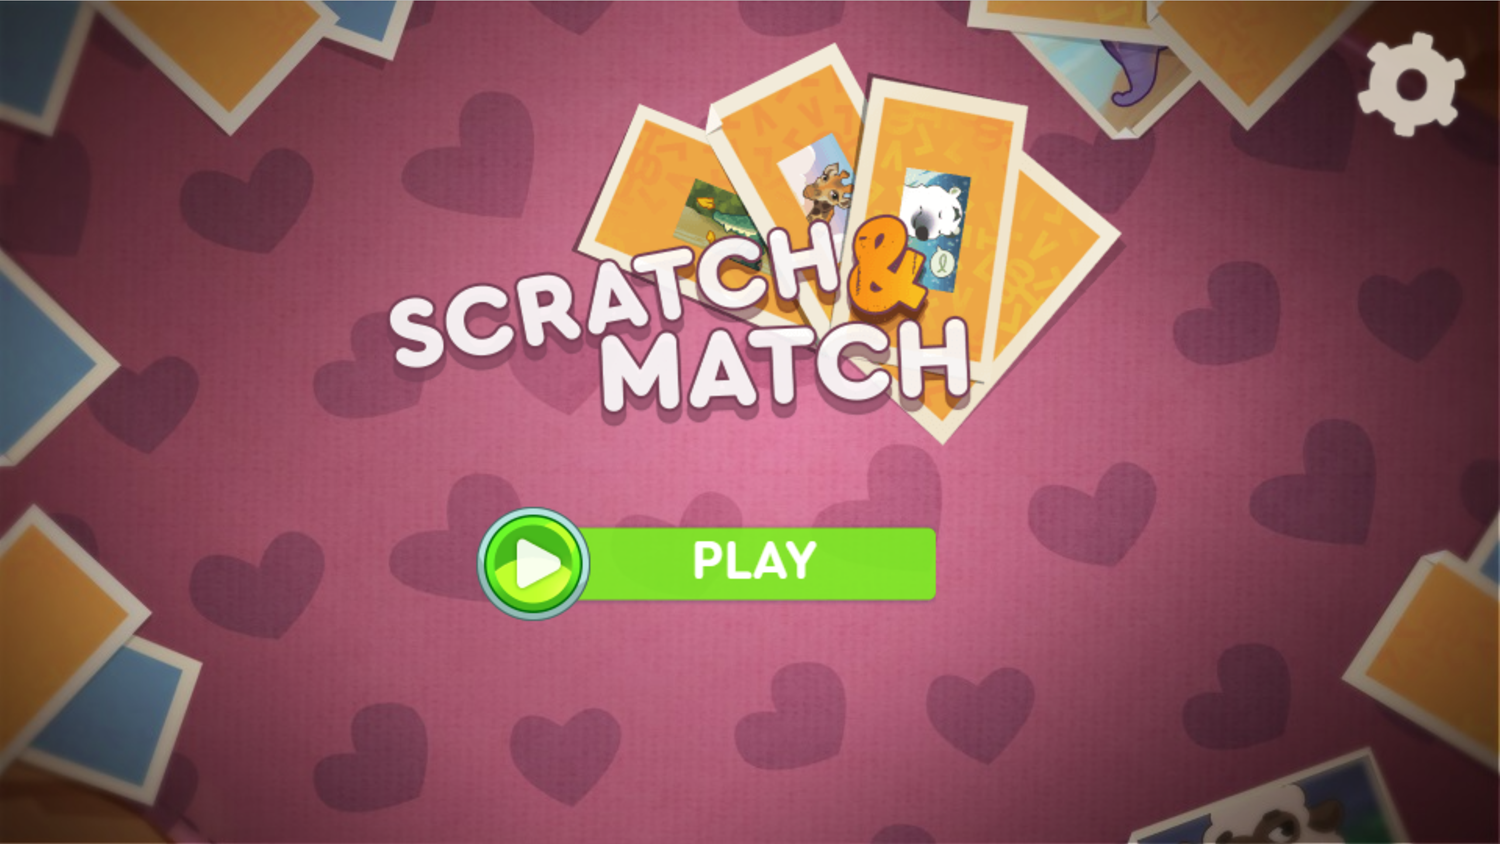 Scratch and Match Animal Game Welcome Screen Screenshot.